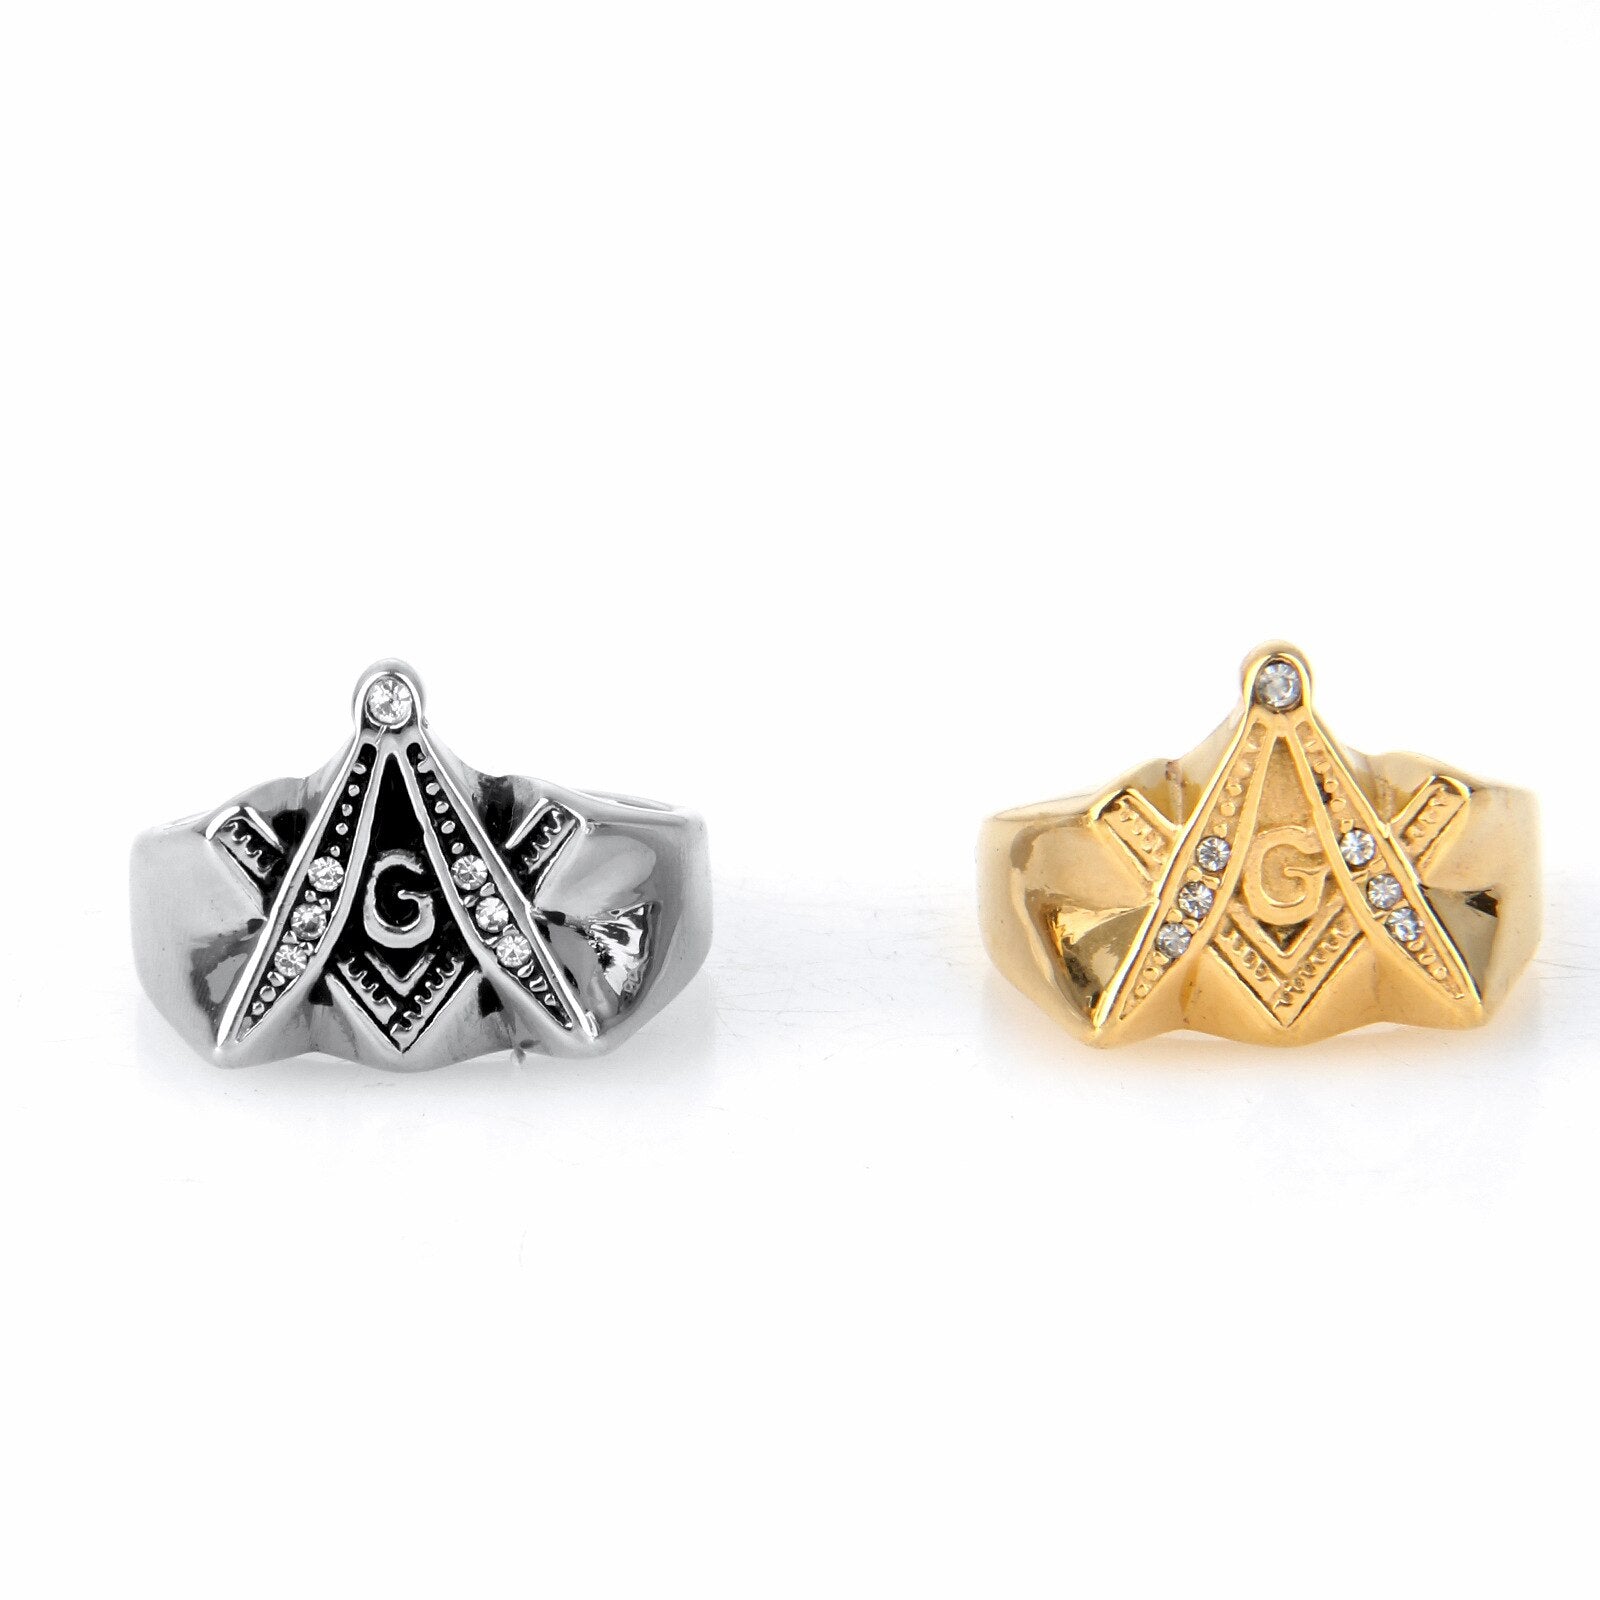 Master of Mason Gold Masonic Ring - Stainless Steel-rings-Masonic Makers